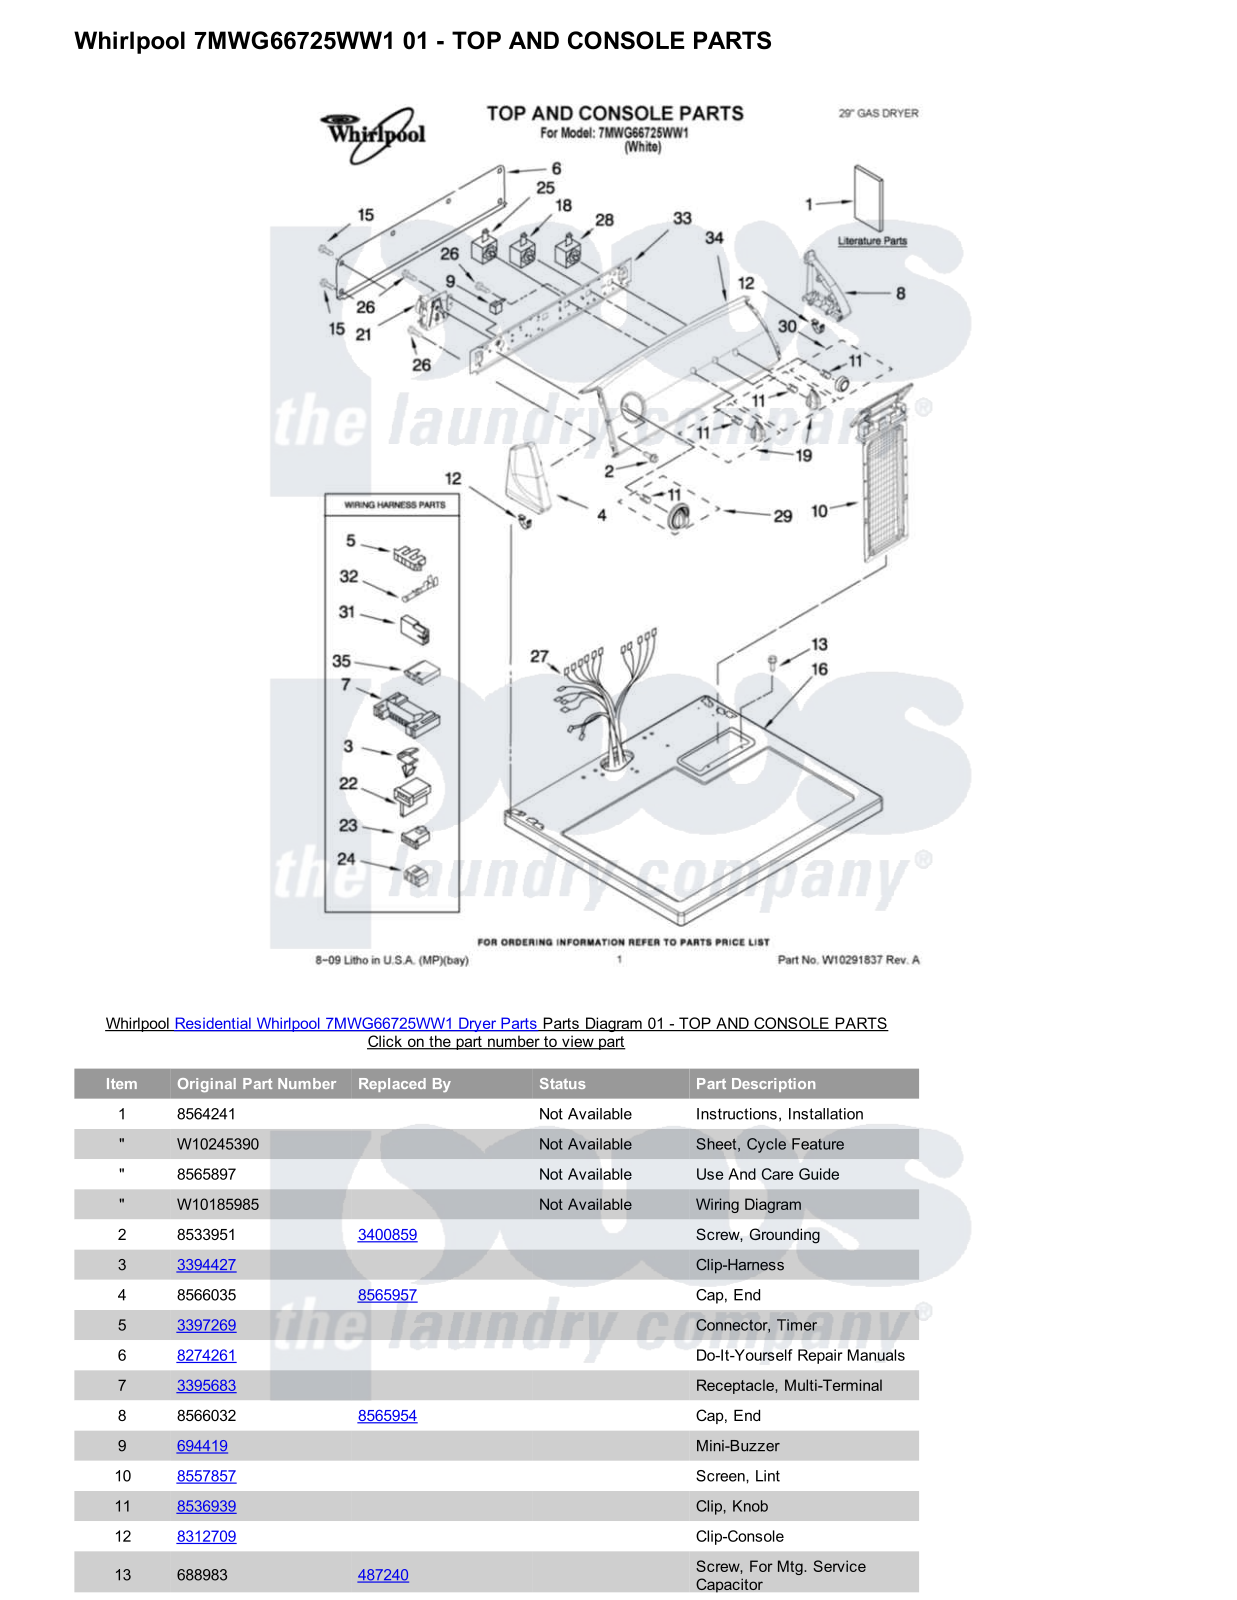 Whirlpool 7MWG66725WW1 Parts Diagram